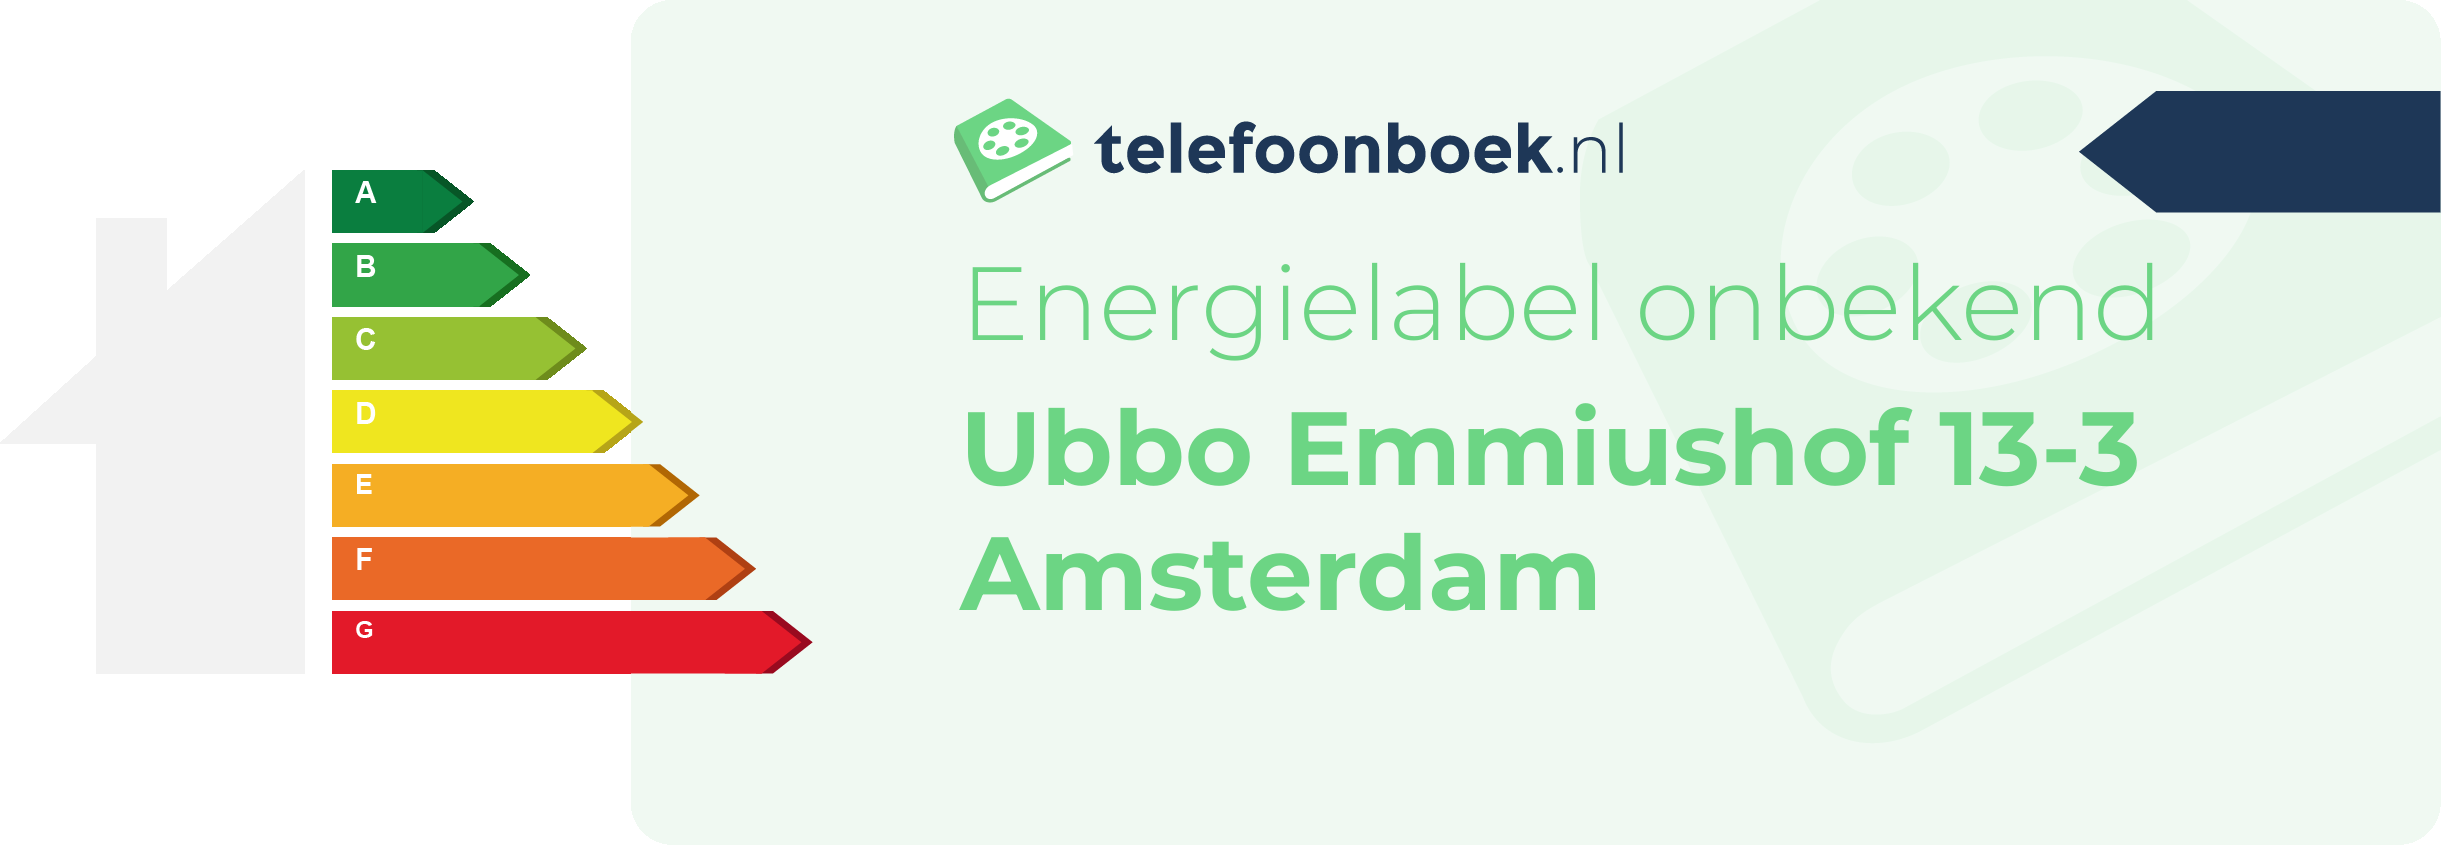 Energielabel Ubbo Emmiushof 13-3 Amsterdam